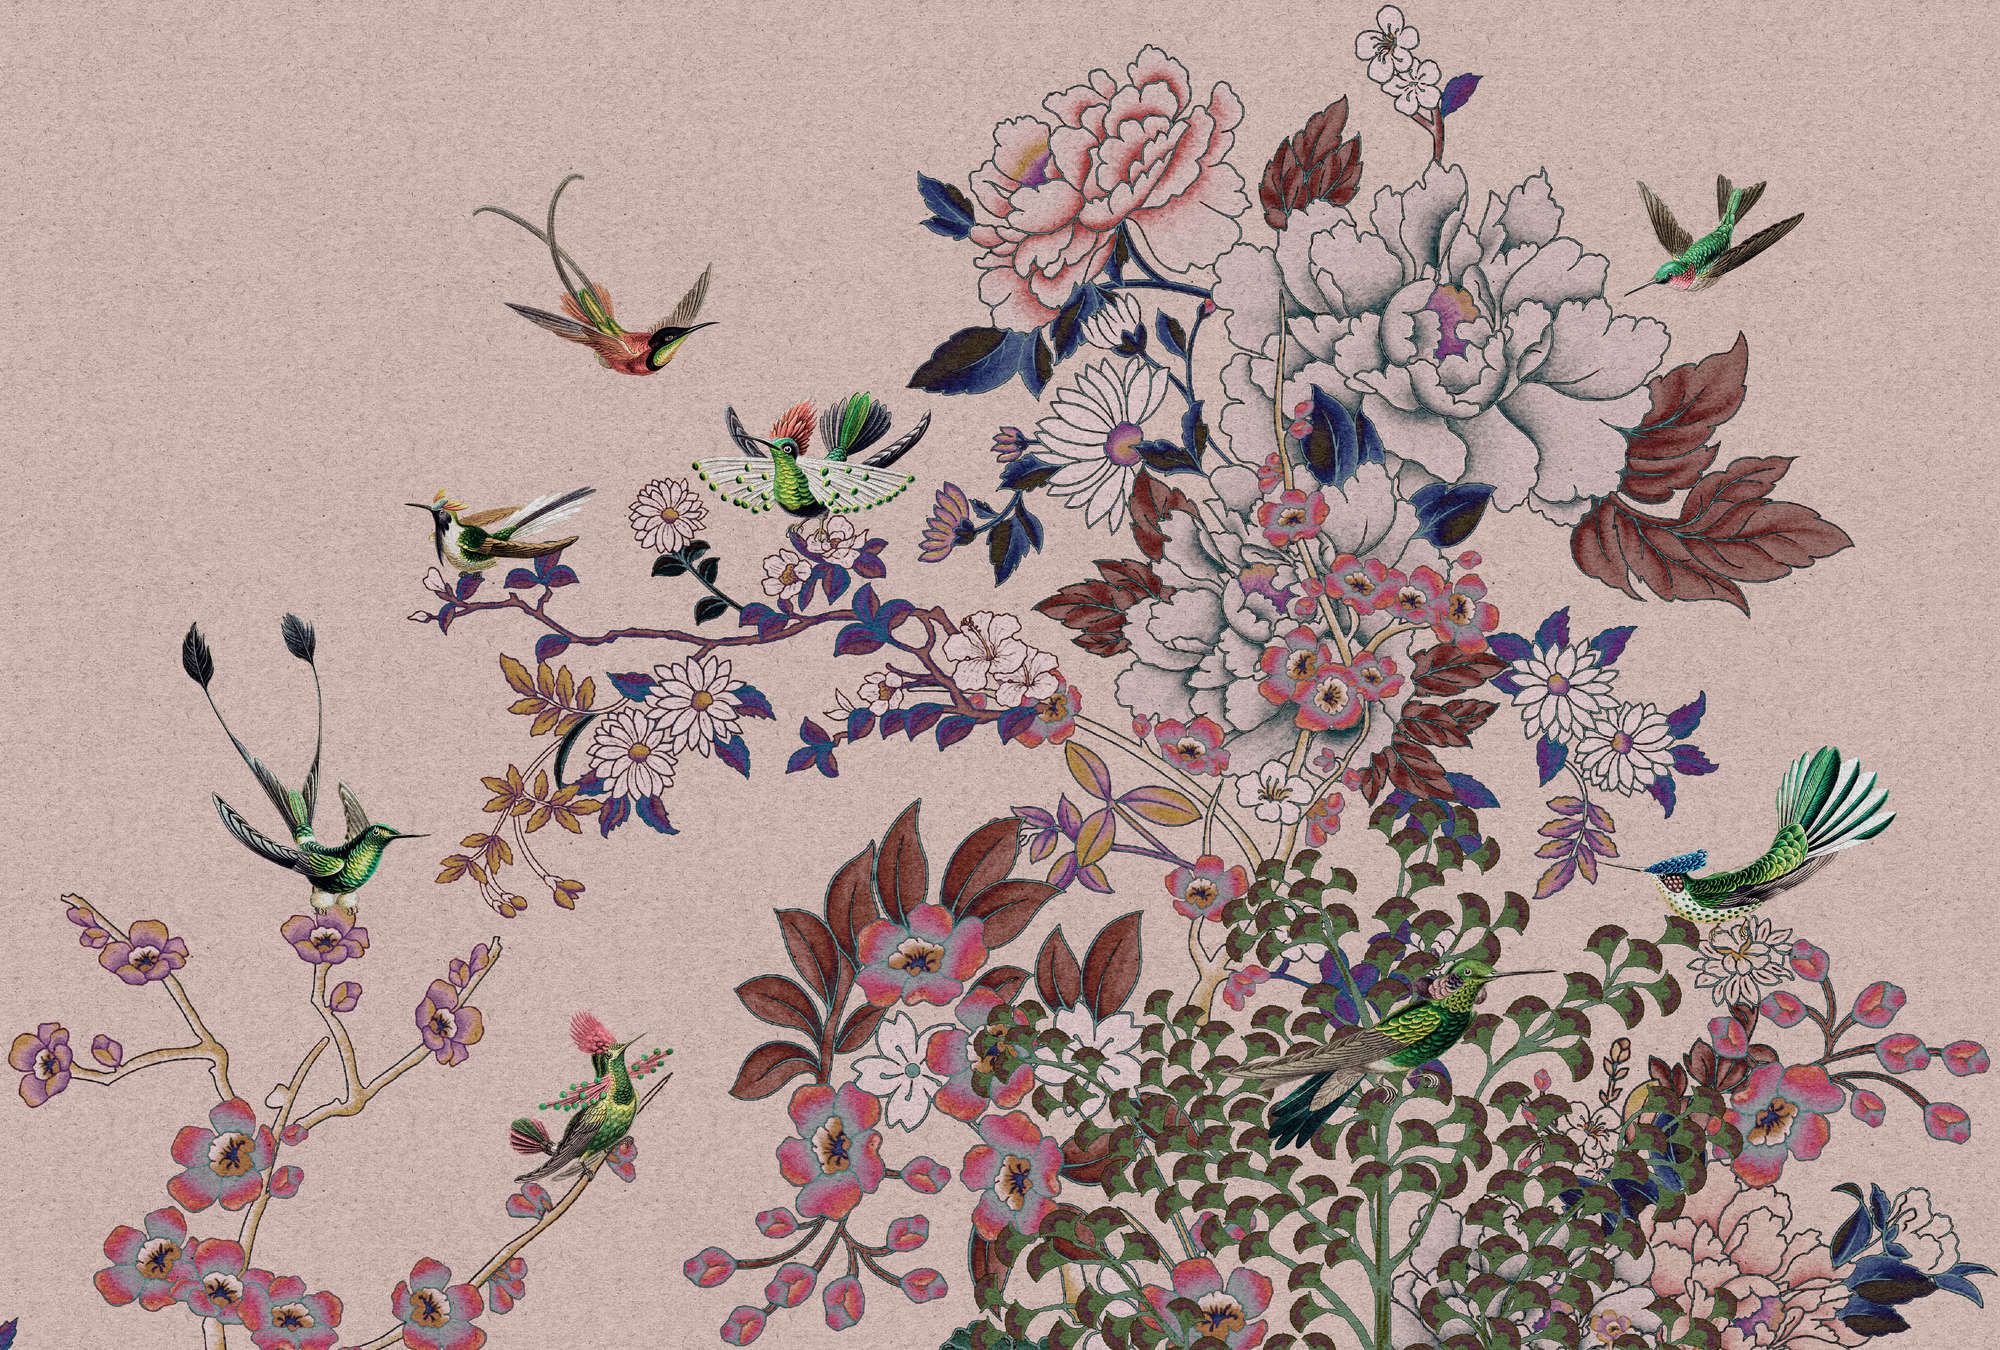             Digital behang »madras 2« - Rooskleurig bloemmotief met kolibries op kraftpapiertextuur - Glad, licht parelmoerachtig vliesmateriaal
        